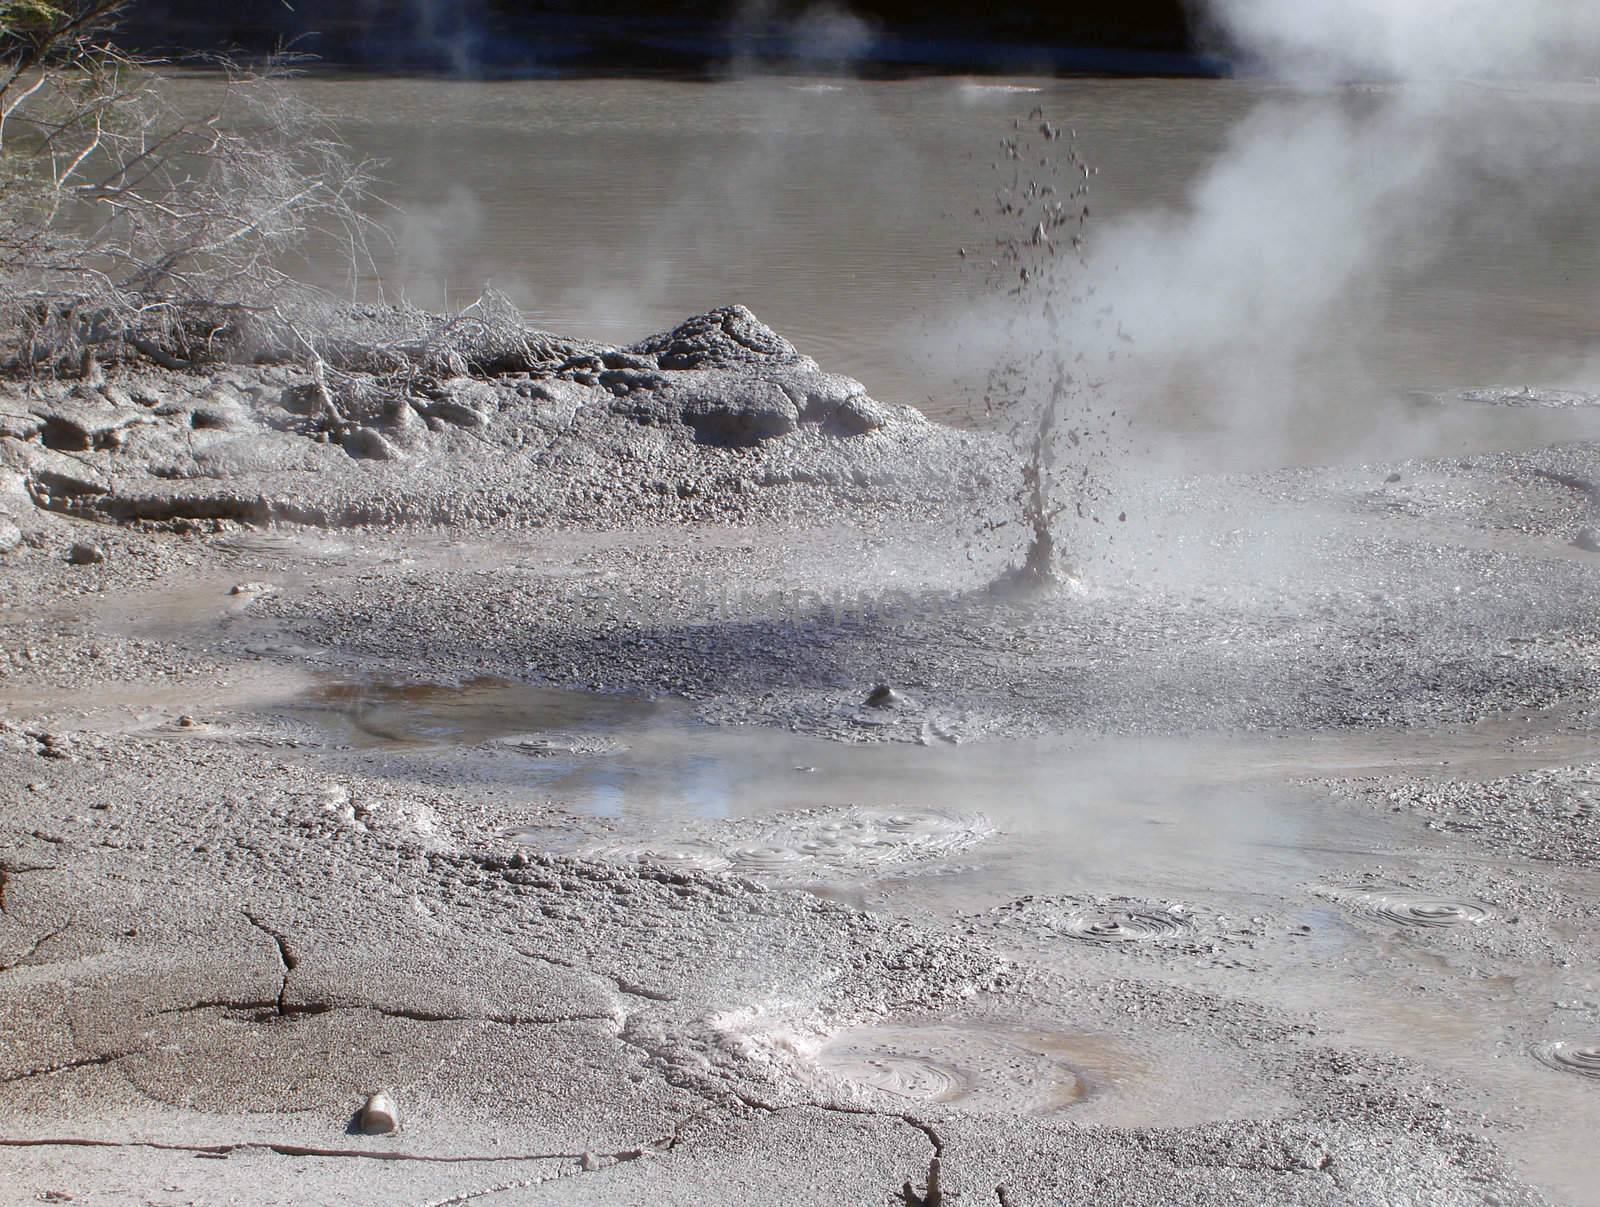 Bubbling Mud releasing Sulphur Dioxide Gas. Geothermal Activity near Rotorua, New Zealand